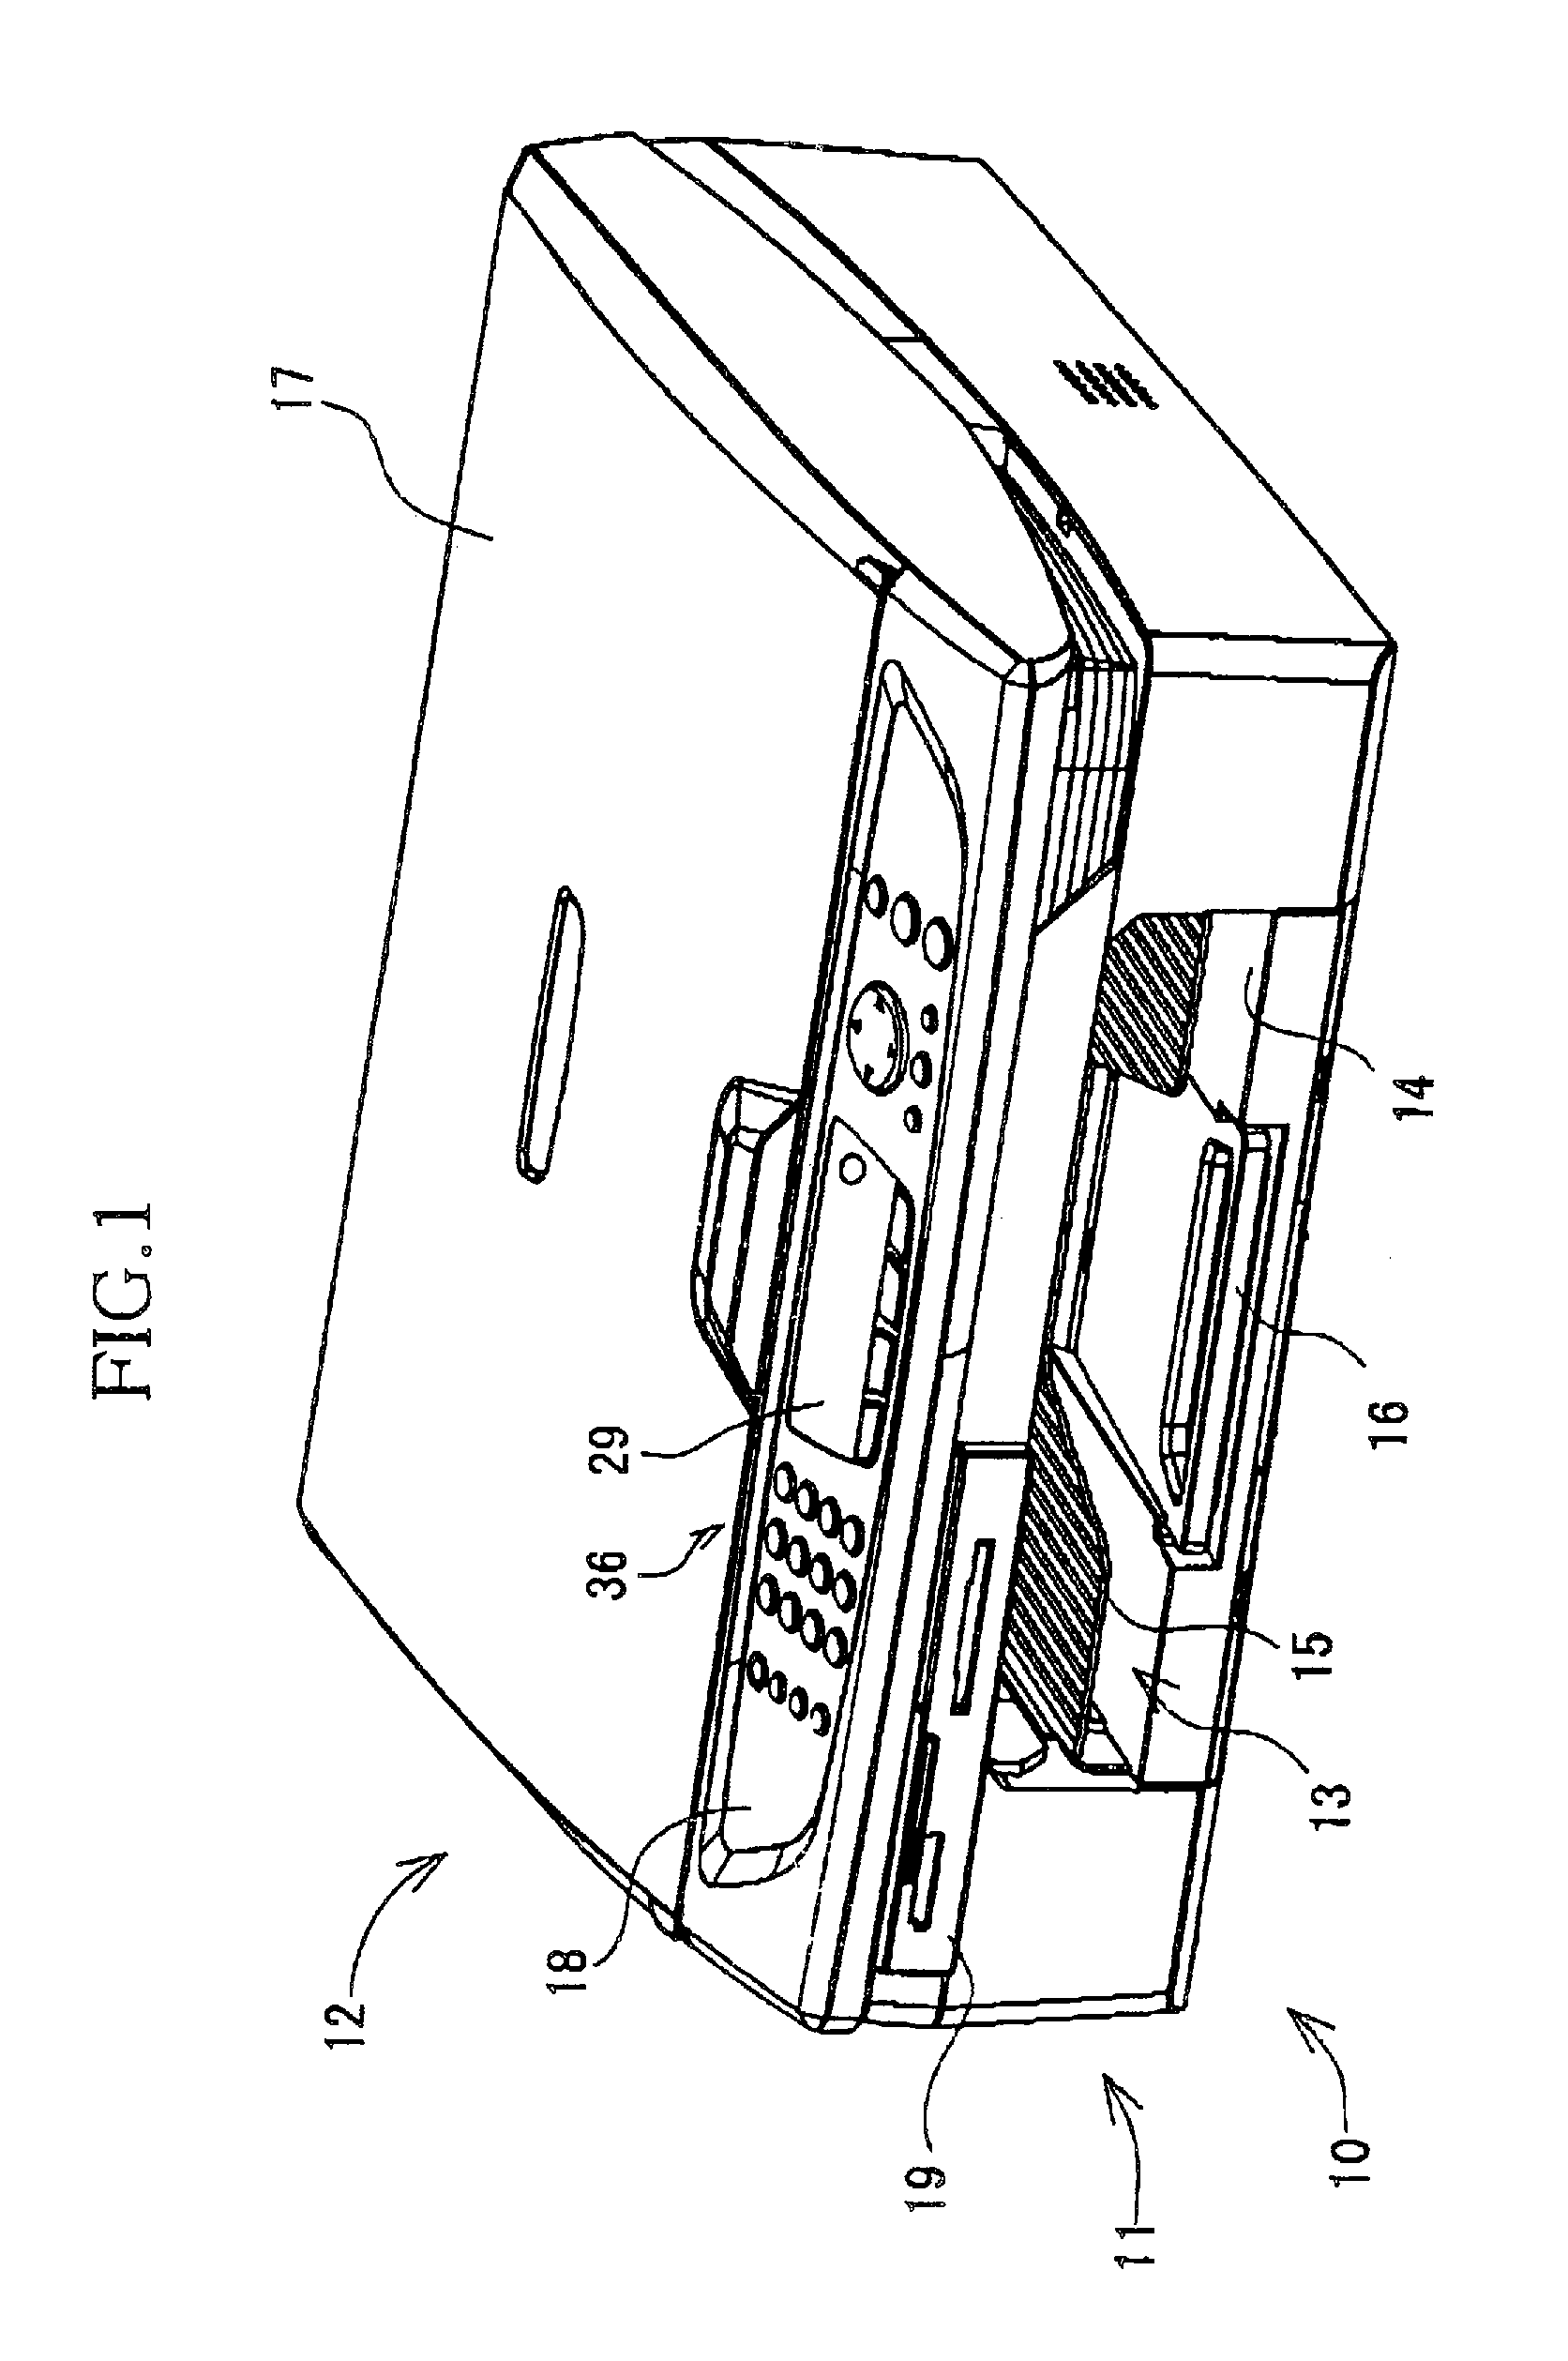 Ink-jet recording apparatus